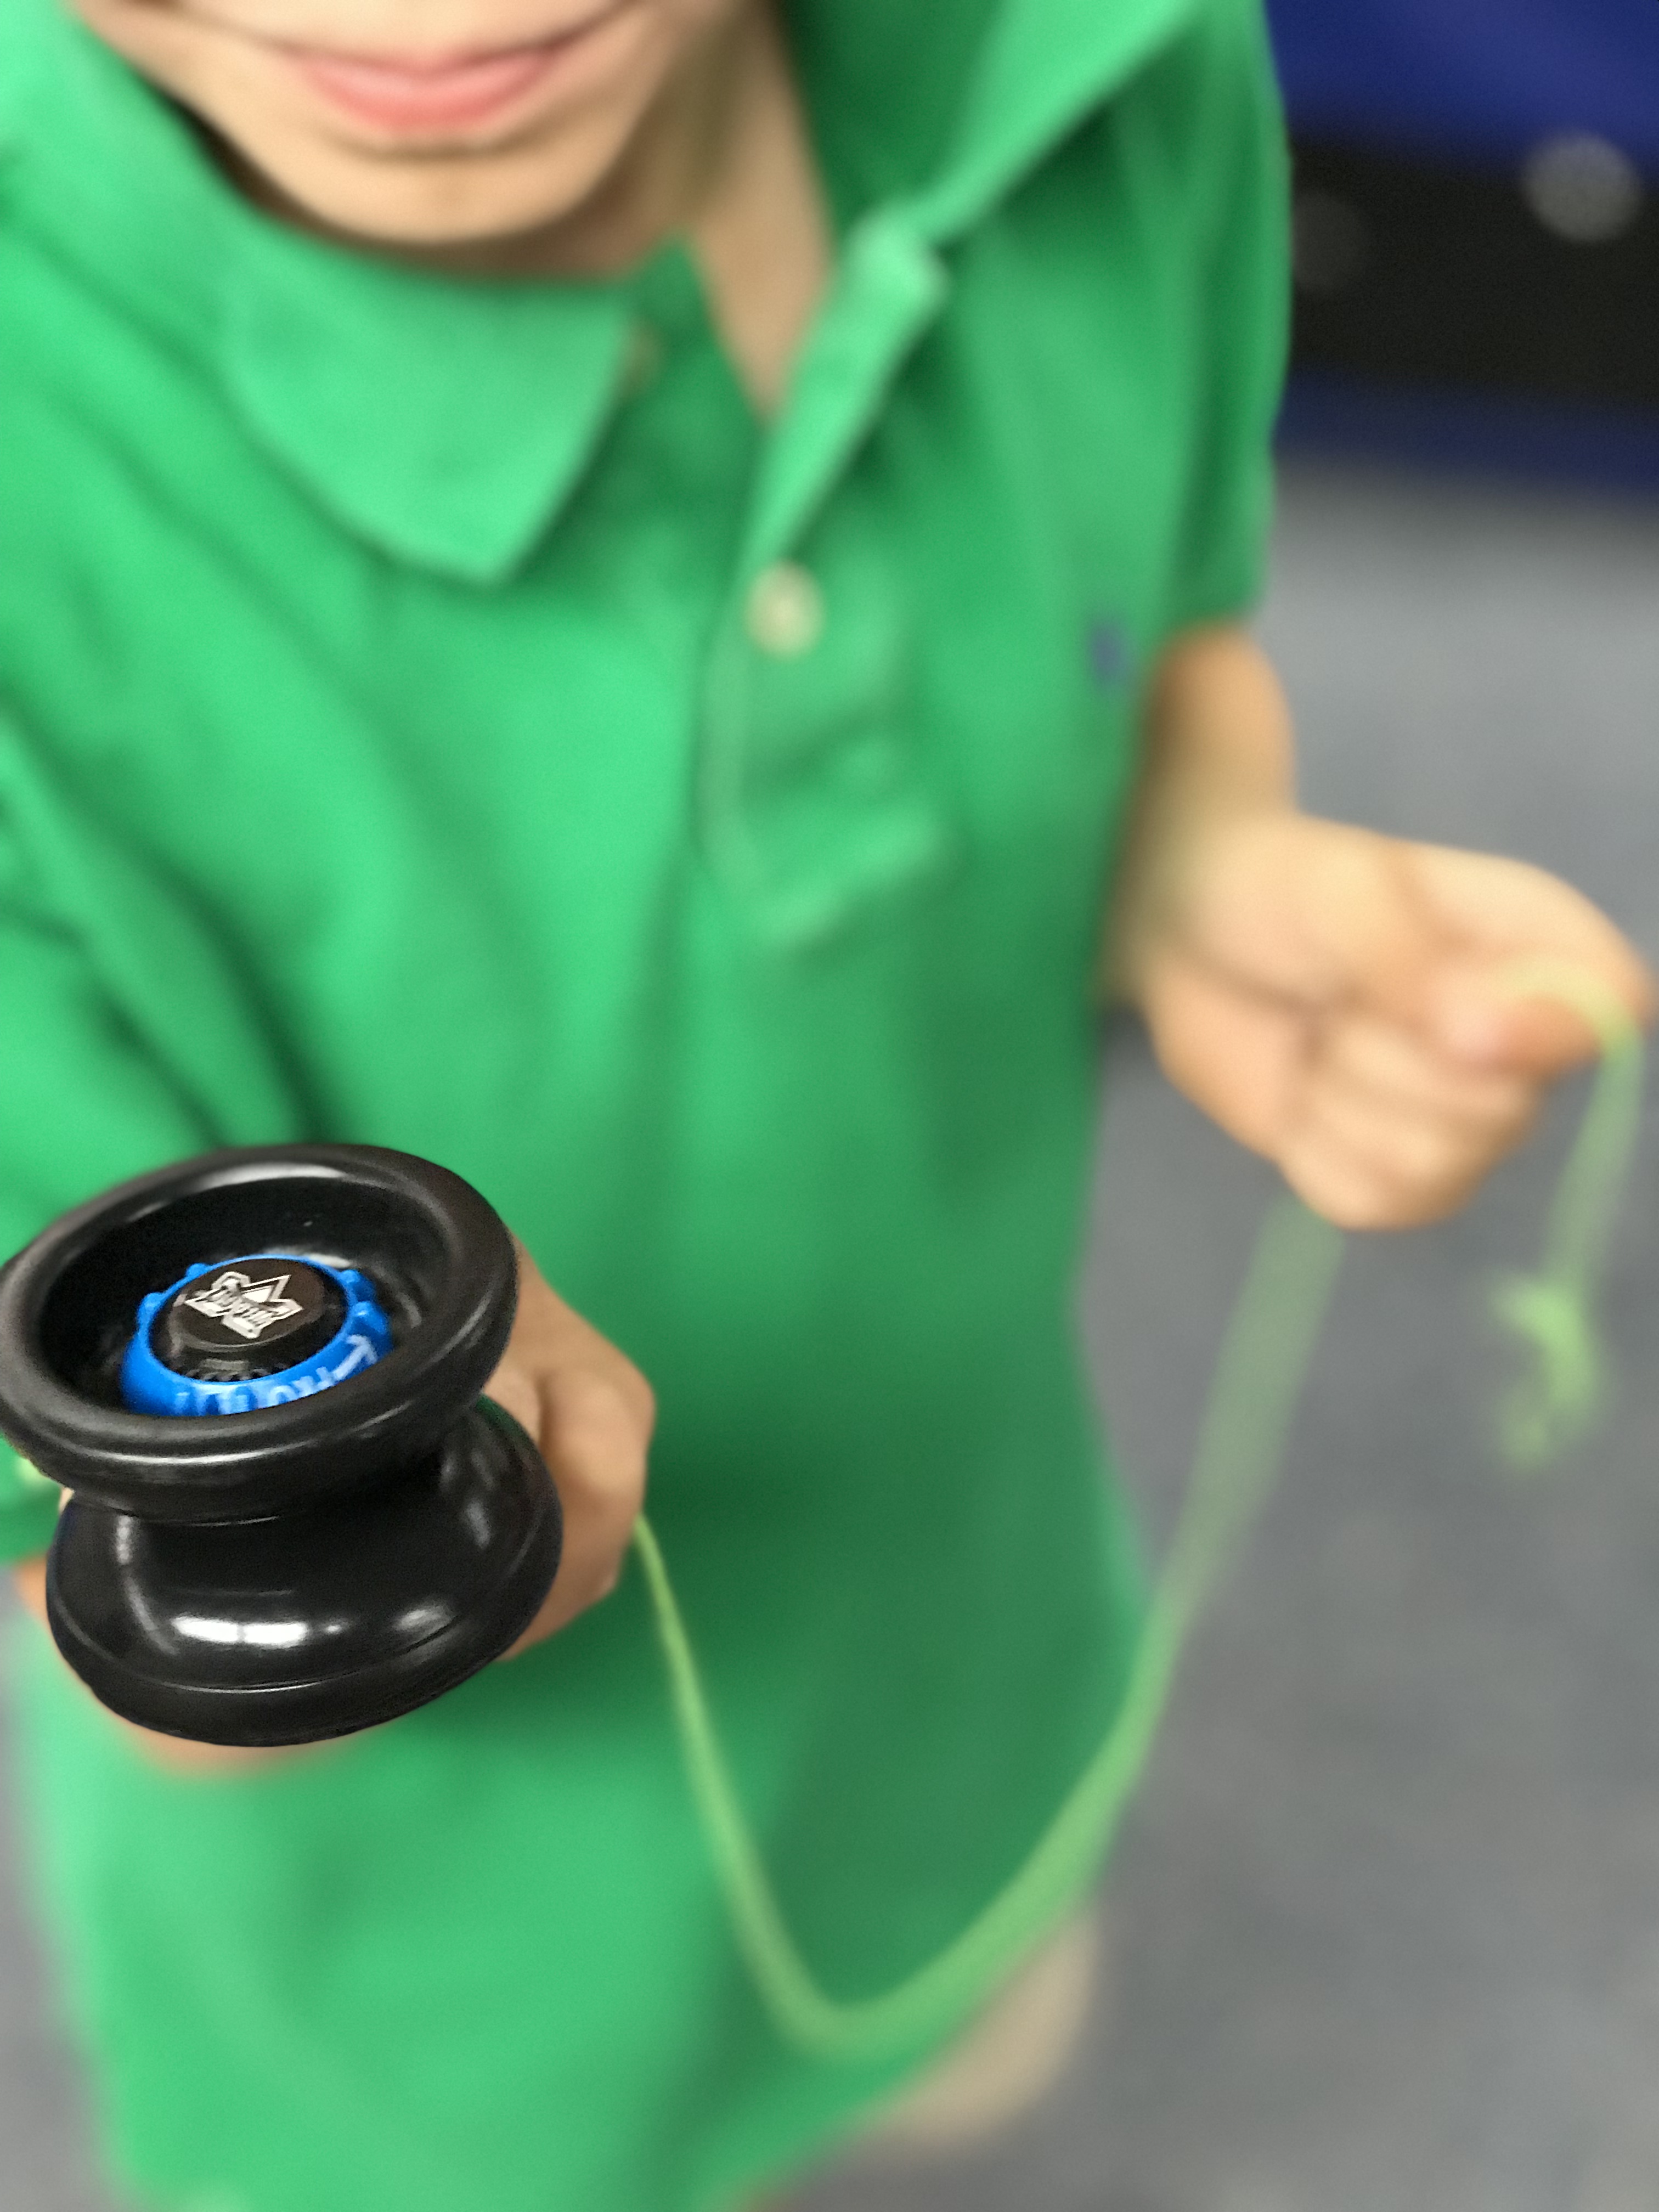 Kid playing with yo-yo